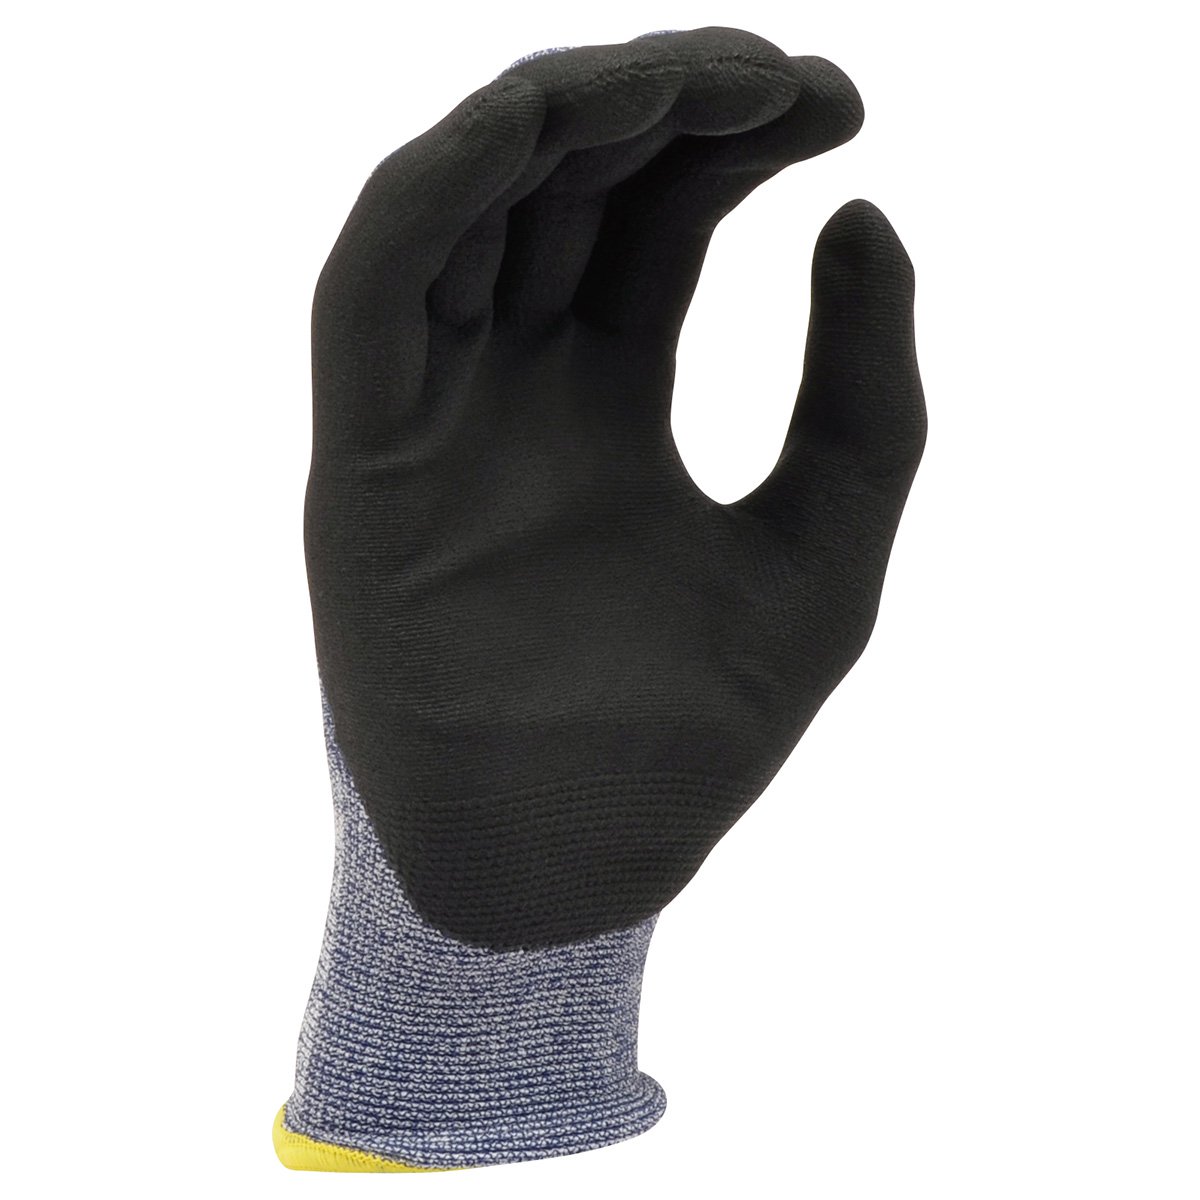 https://www.walkersgameear.com/wp-content/uploads/sites/4/2021/06/walkers-a3-xtra-grip-cut-resistant-gloves-palm.jpg